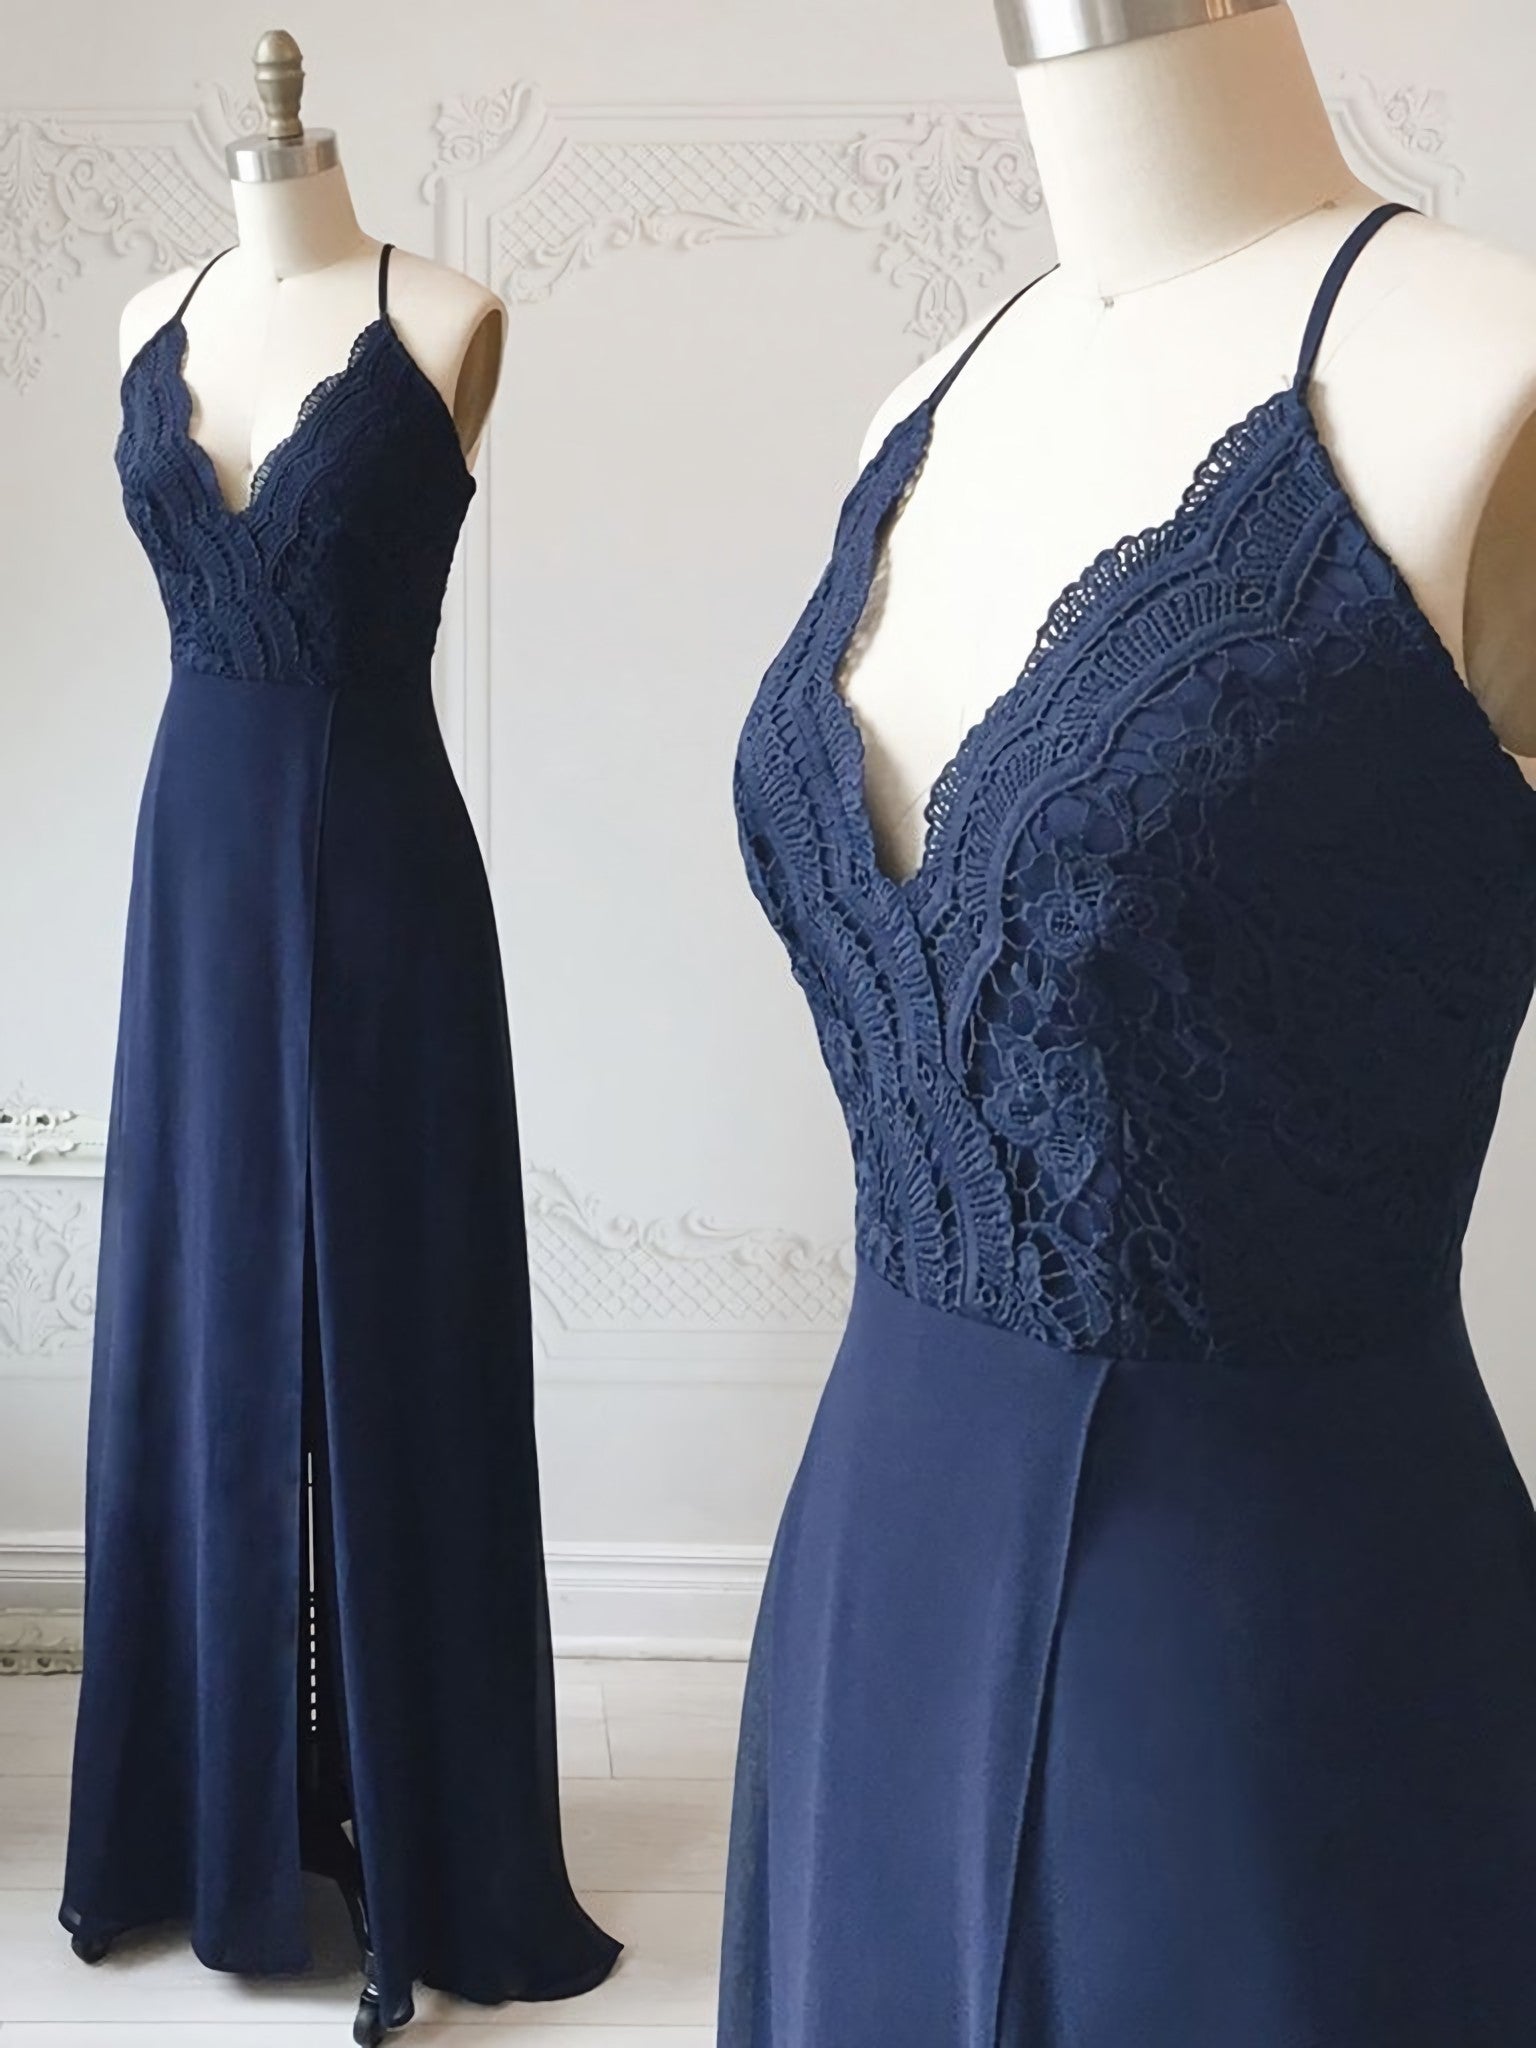 Prom Dress Elegant, Spaghetti Straps Floor Length Navy Blue Lace Prom Dresses, Navy Blue Lace Formal Evening Bridesmaid Dresses